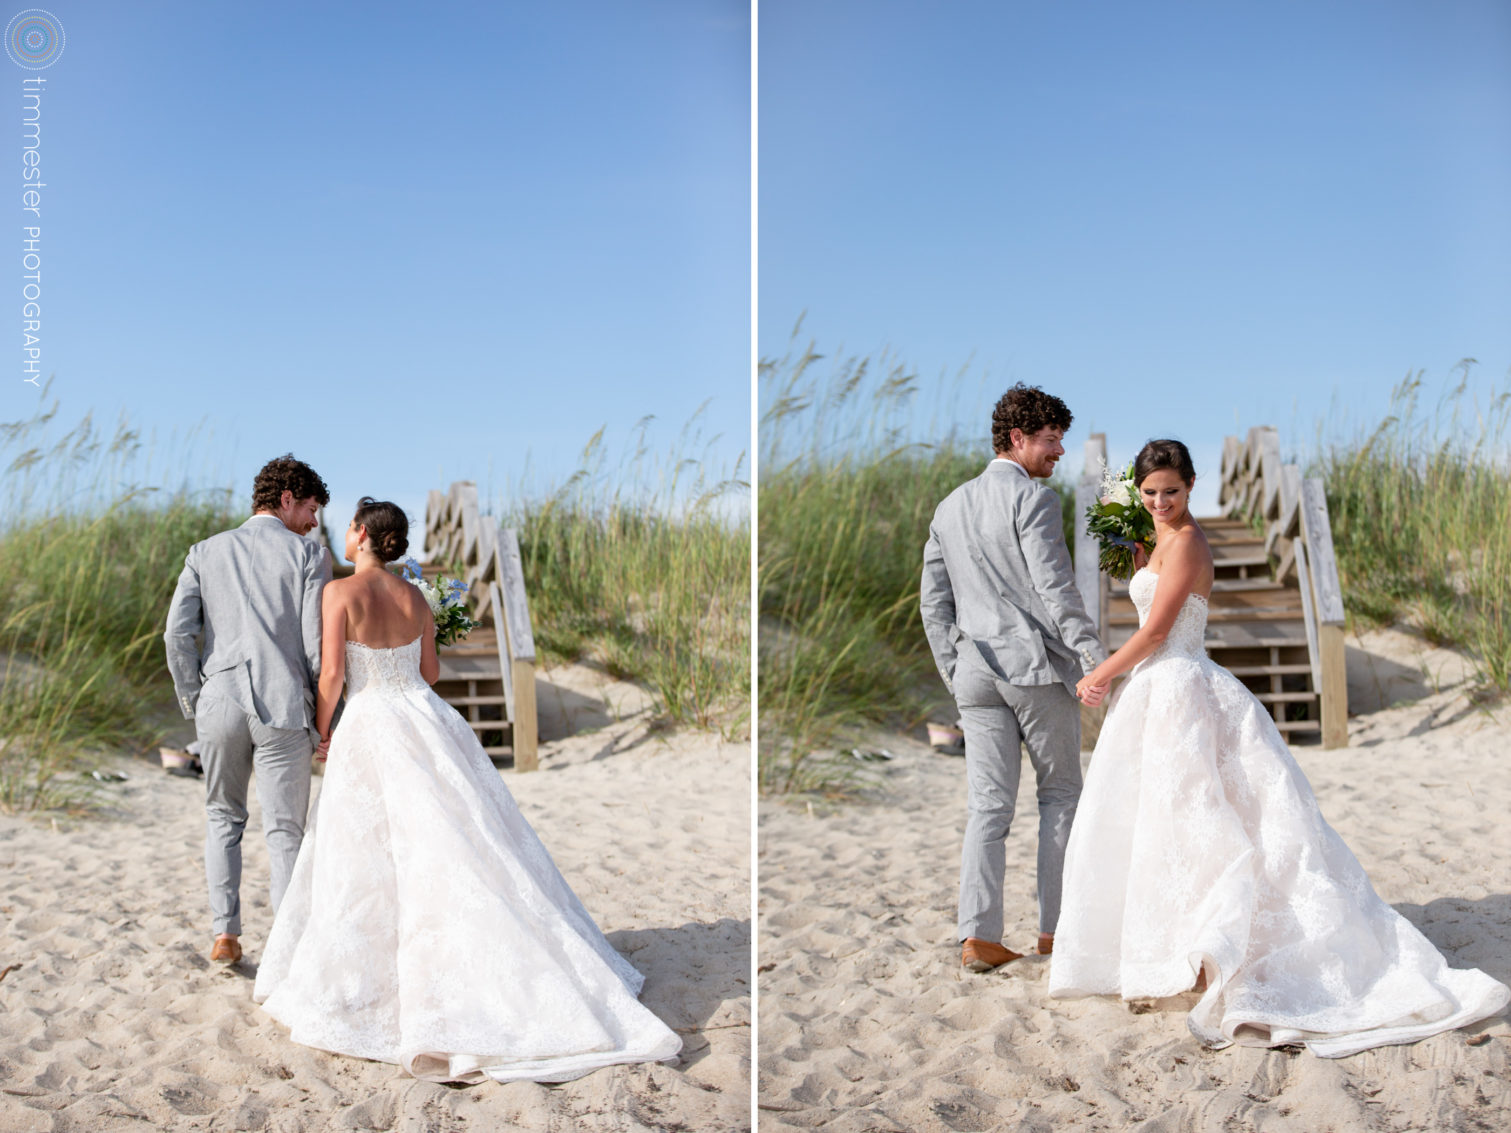 A beach wedding ceremony in North Carolina at Bald Head Island